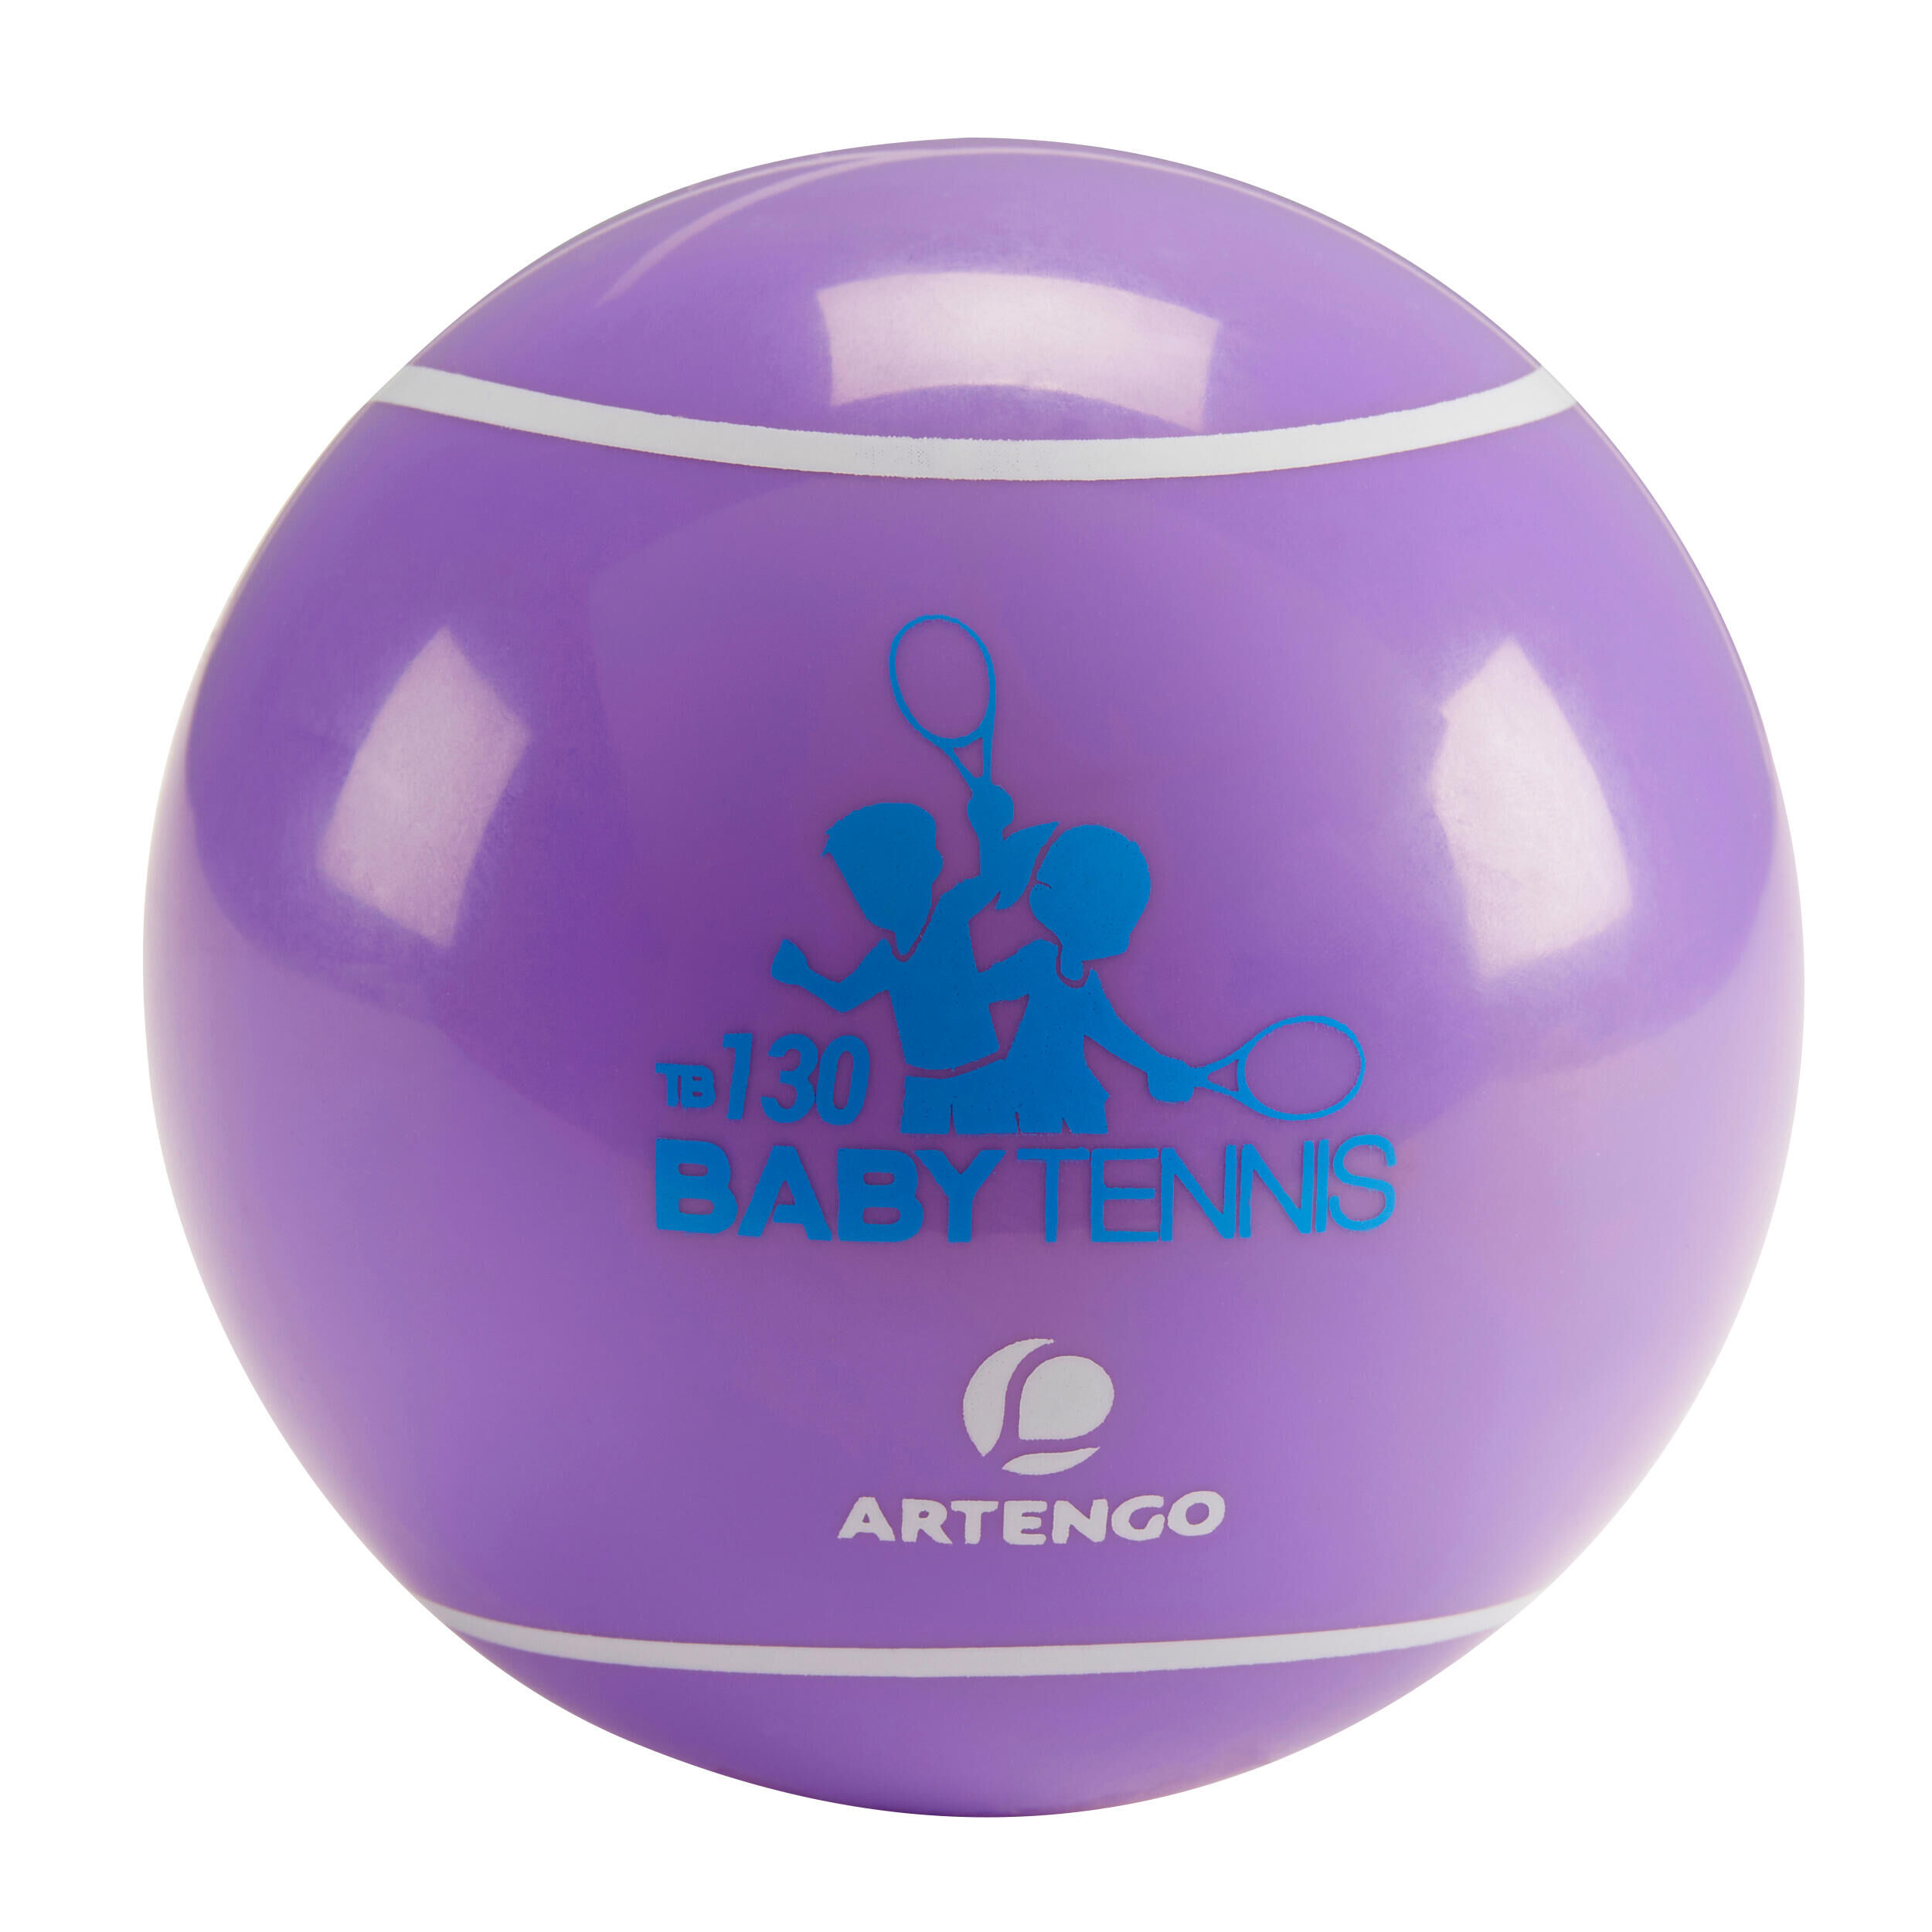 ARTENGO TB 730 Baby Tennis Ball - Purple